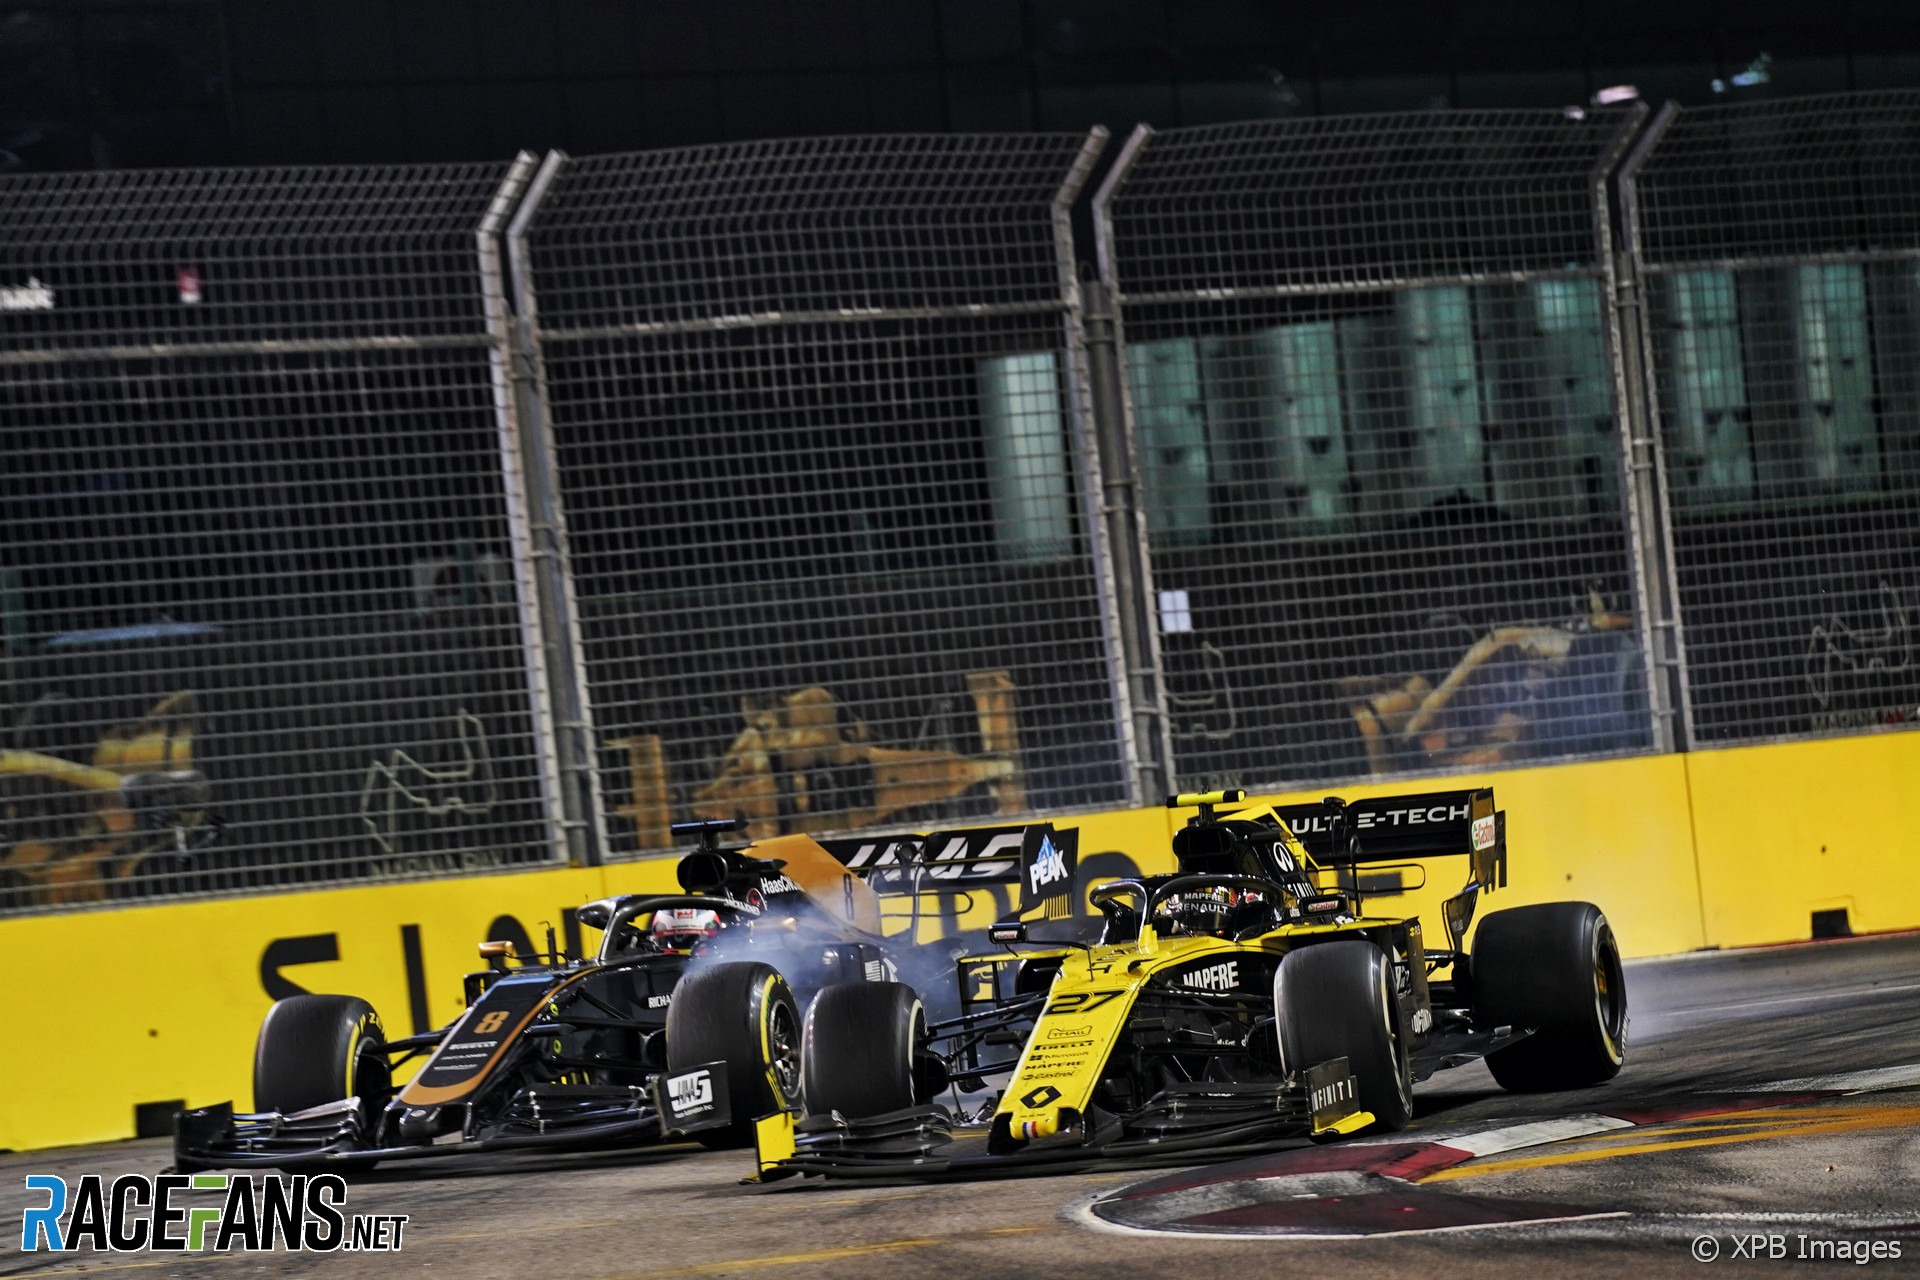 Nico Hulkenberg, Romain Grosjean, Singapore, 2019